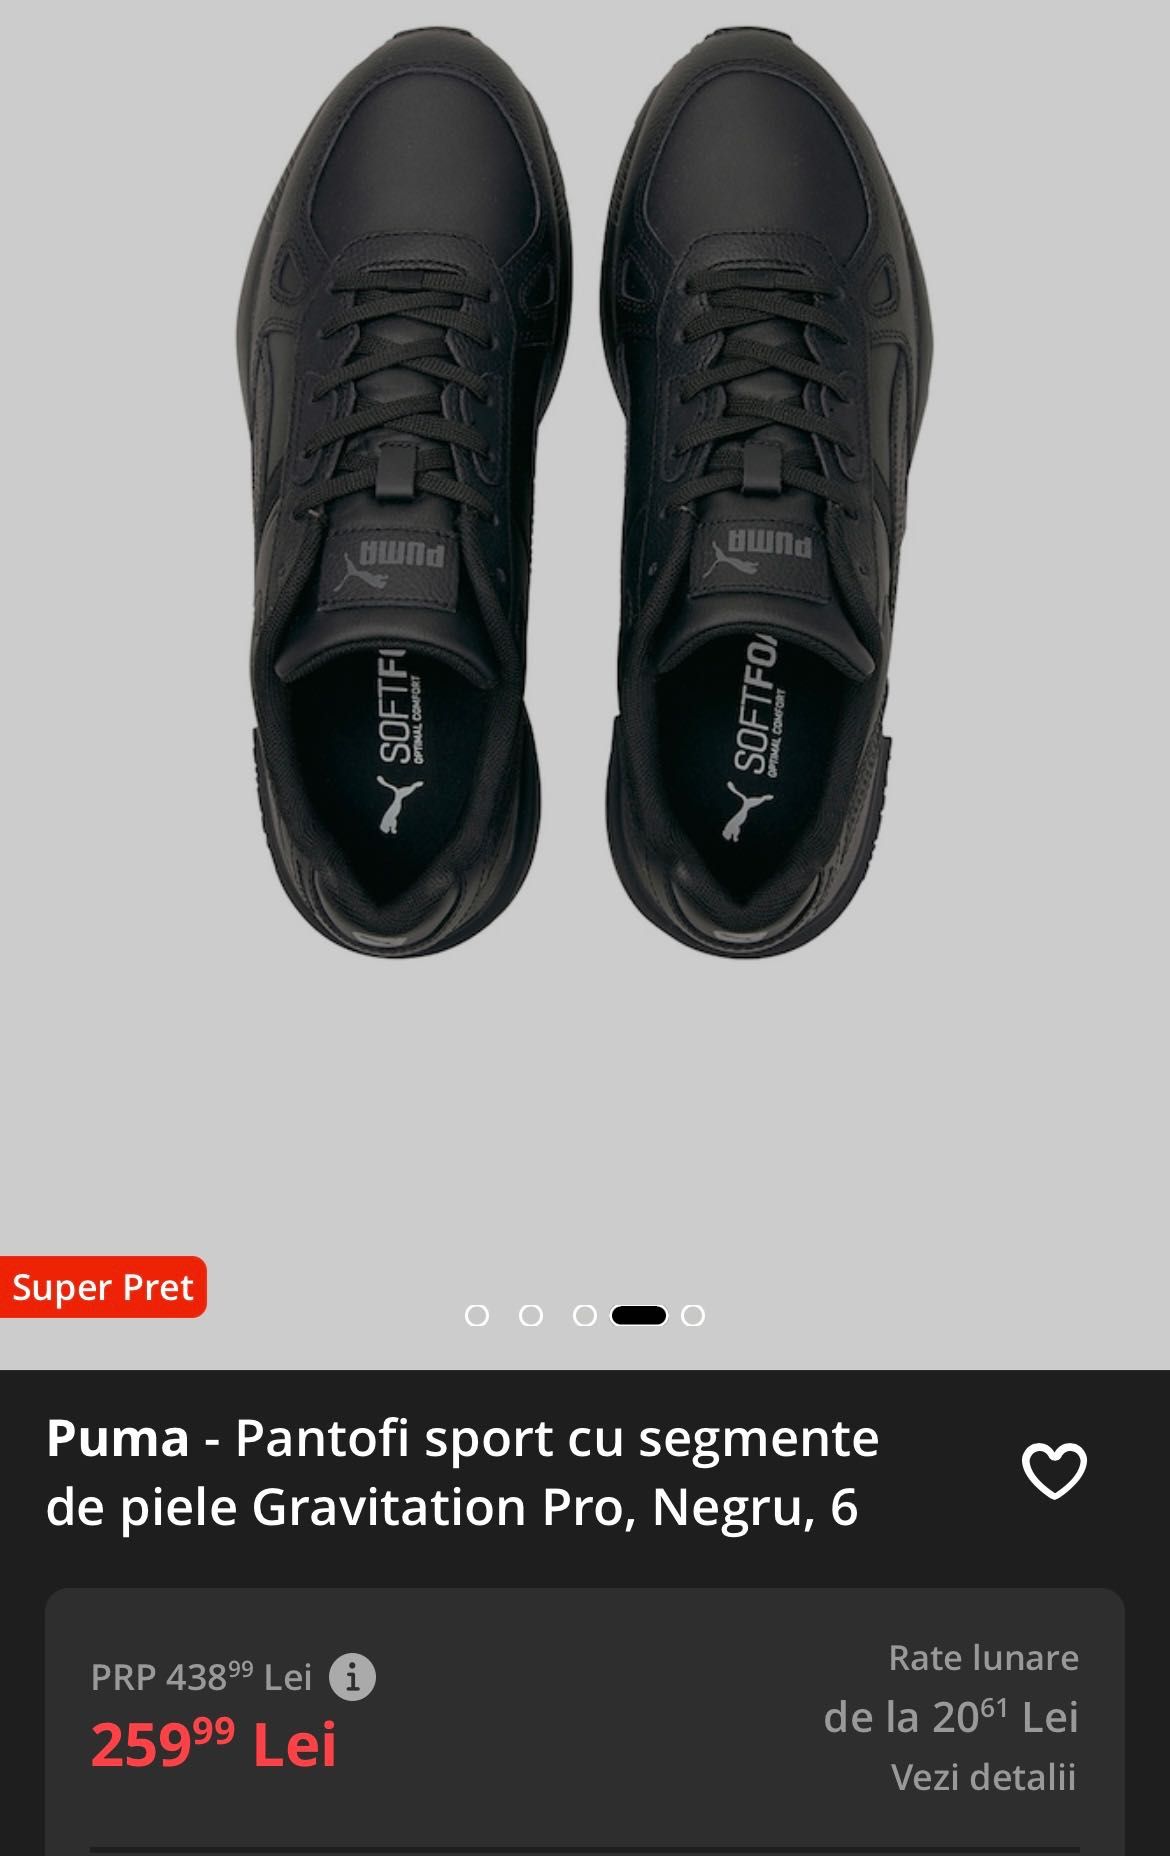 Puma - Pantofi sport cu segmente de piele Gravitation Pro, Negru